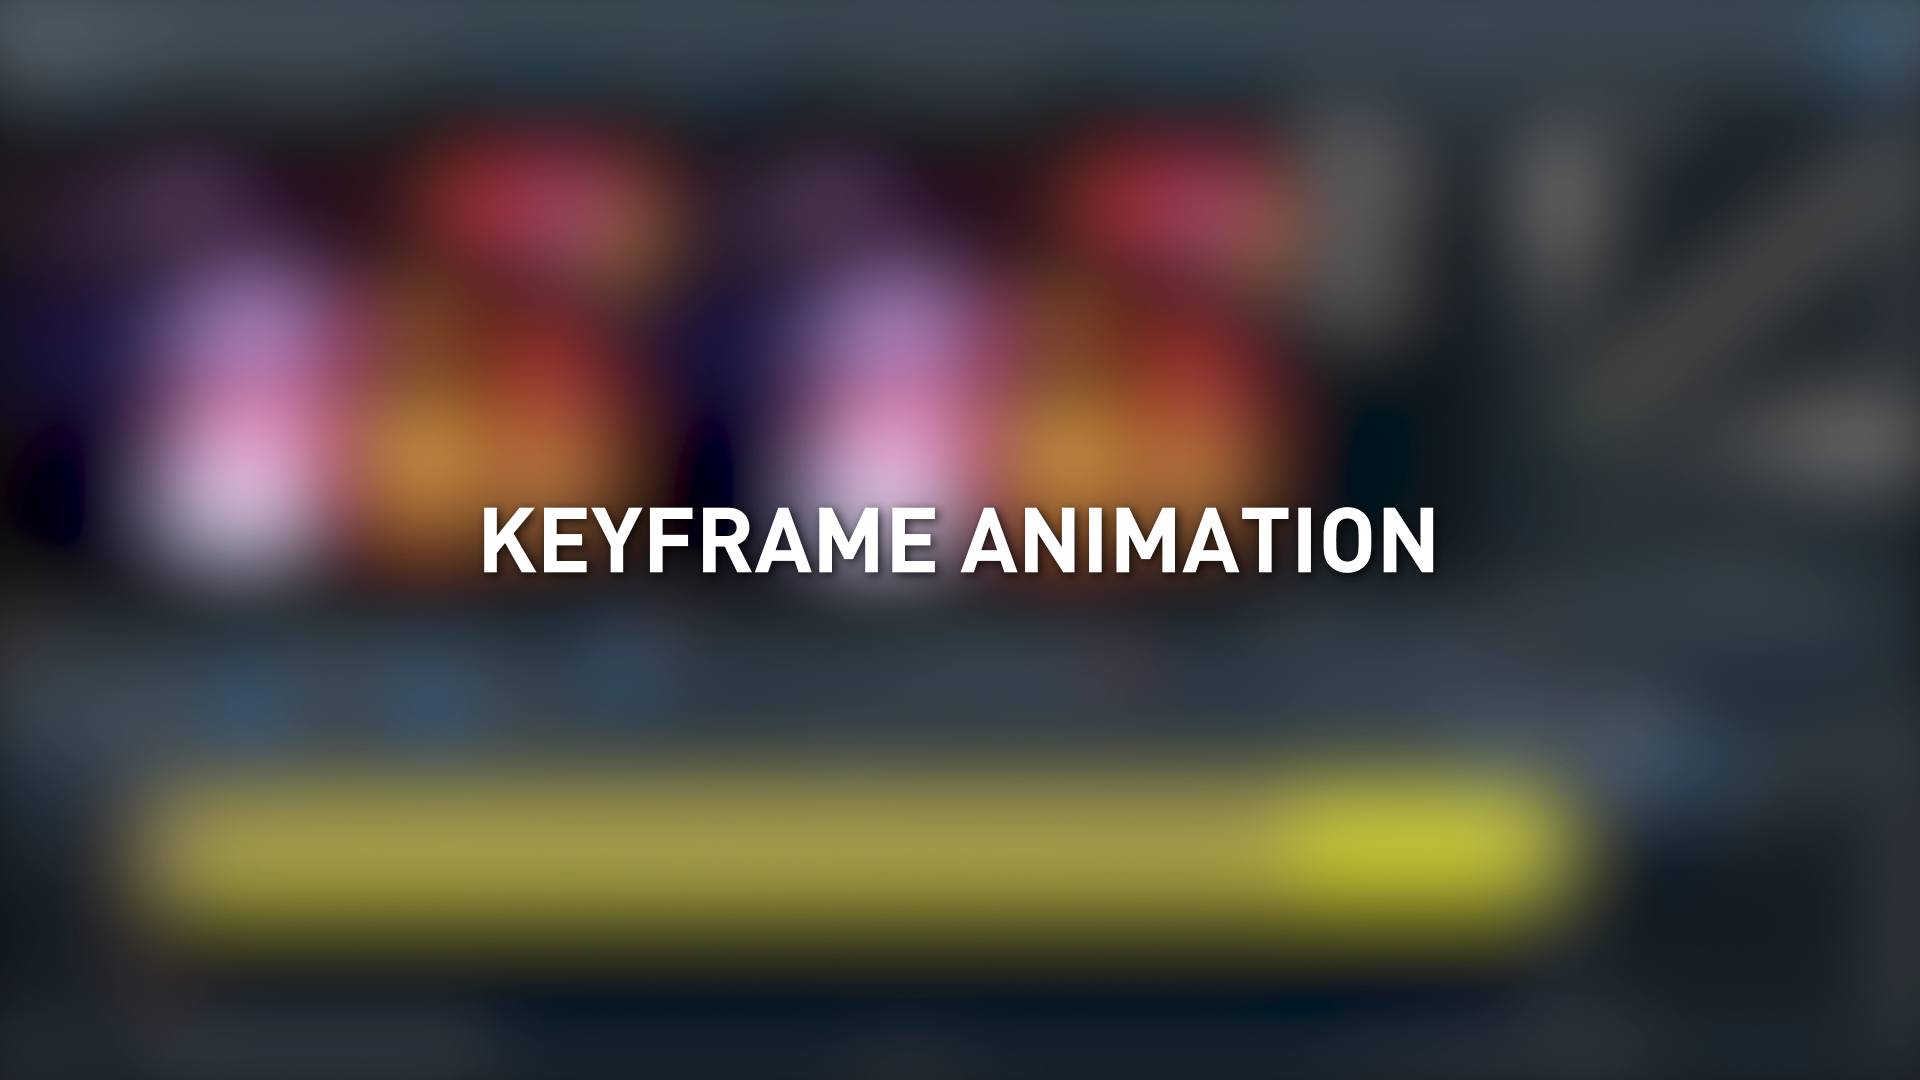 Keyframe animation